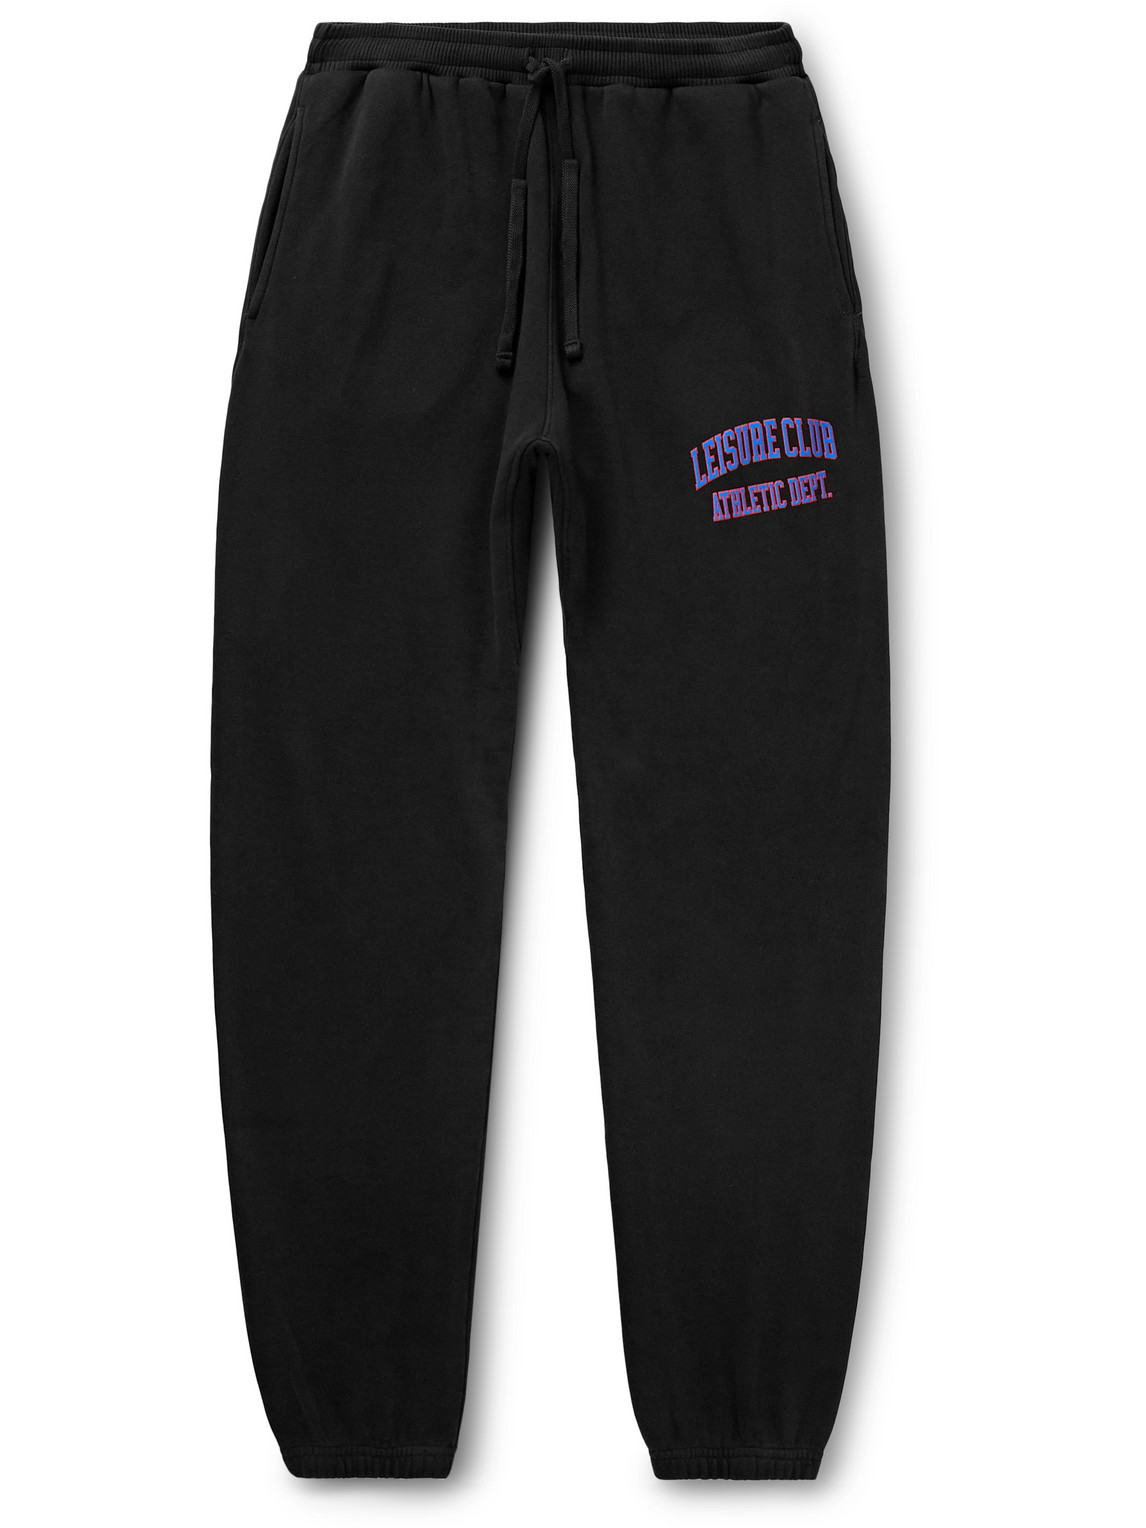 Pasadena Leisure Club - Athletic Dept. Tapered Logo-Print Garment-Dyed Cotton-Jersey Sweatpants - Men - Black - XL von Pasadena Leisure Club